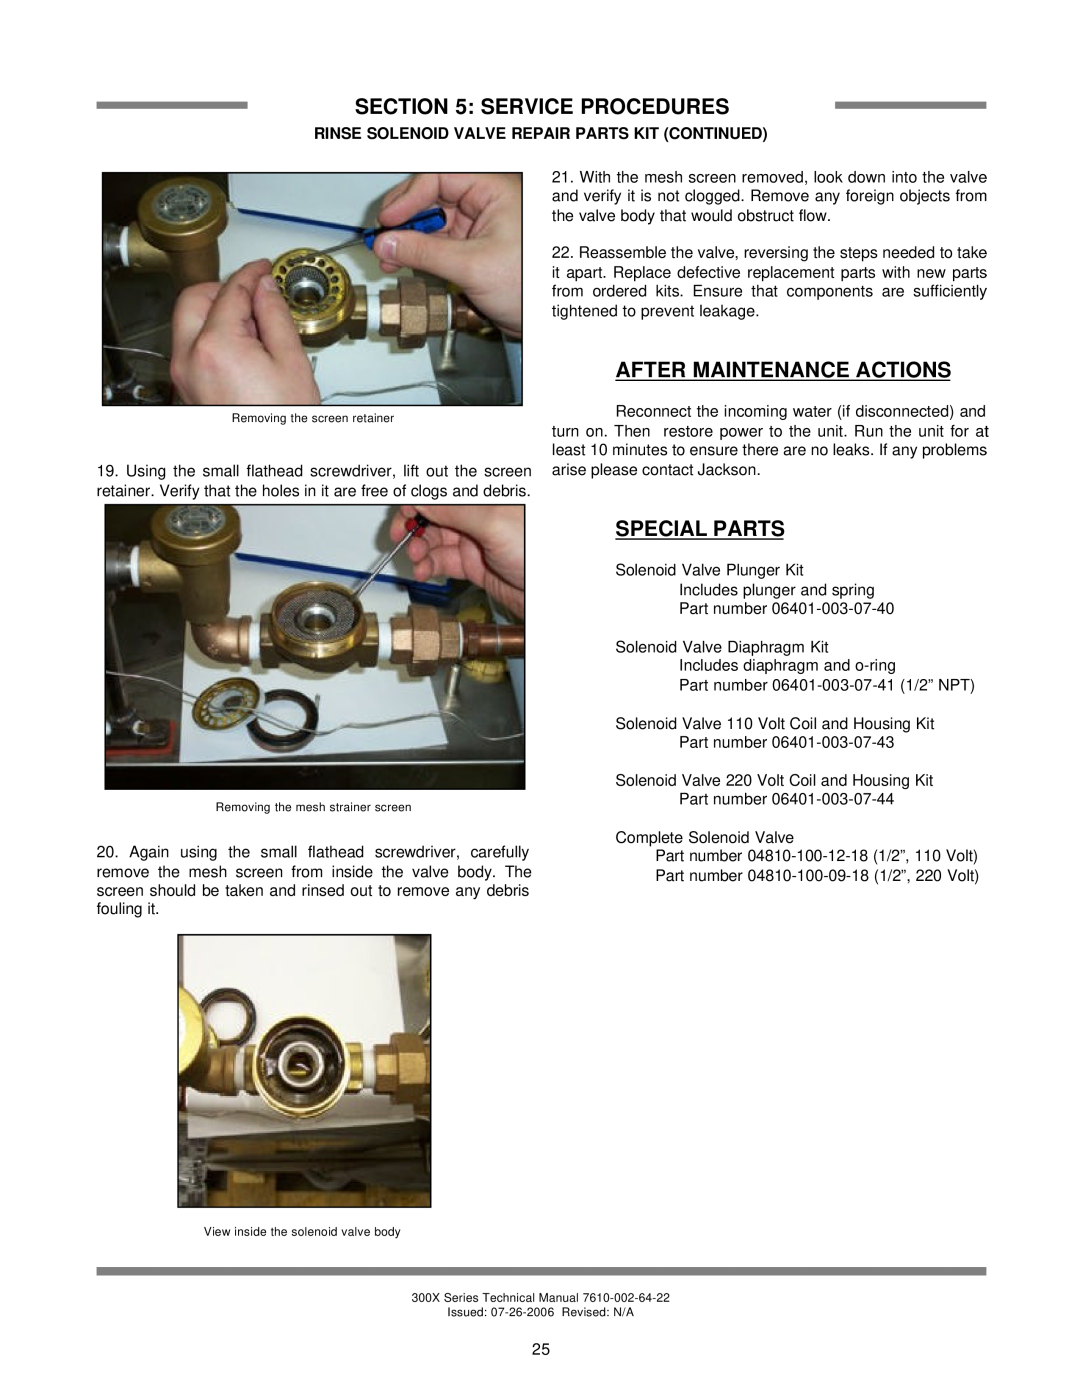 Jackson 300XN, 300XS, 300XLT technical manual After Maintenance Actions, Special Parts, Service Procedures 